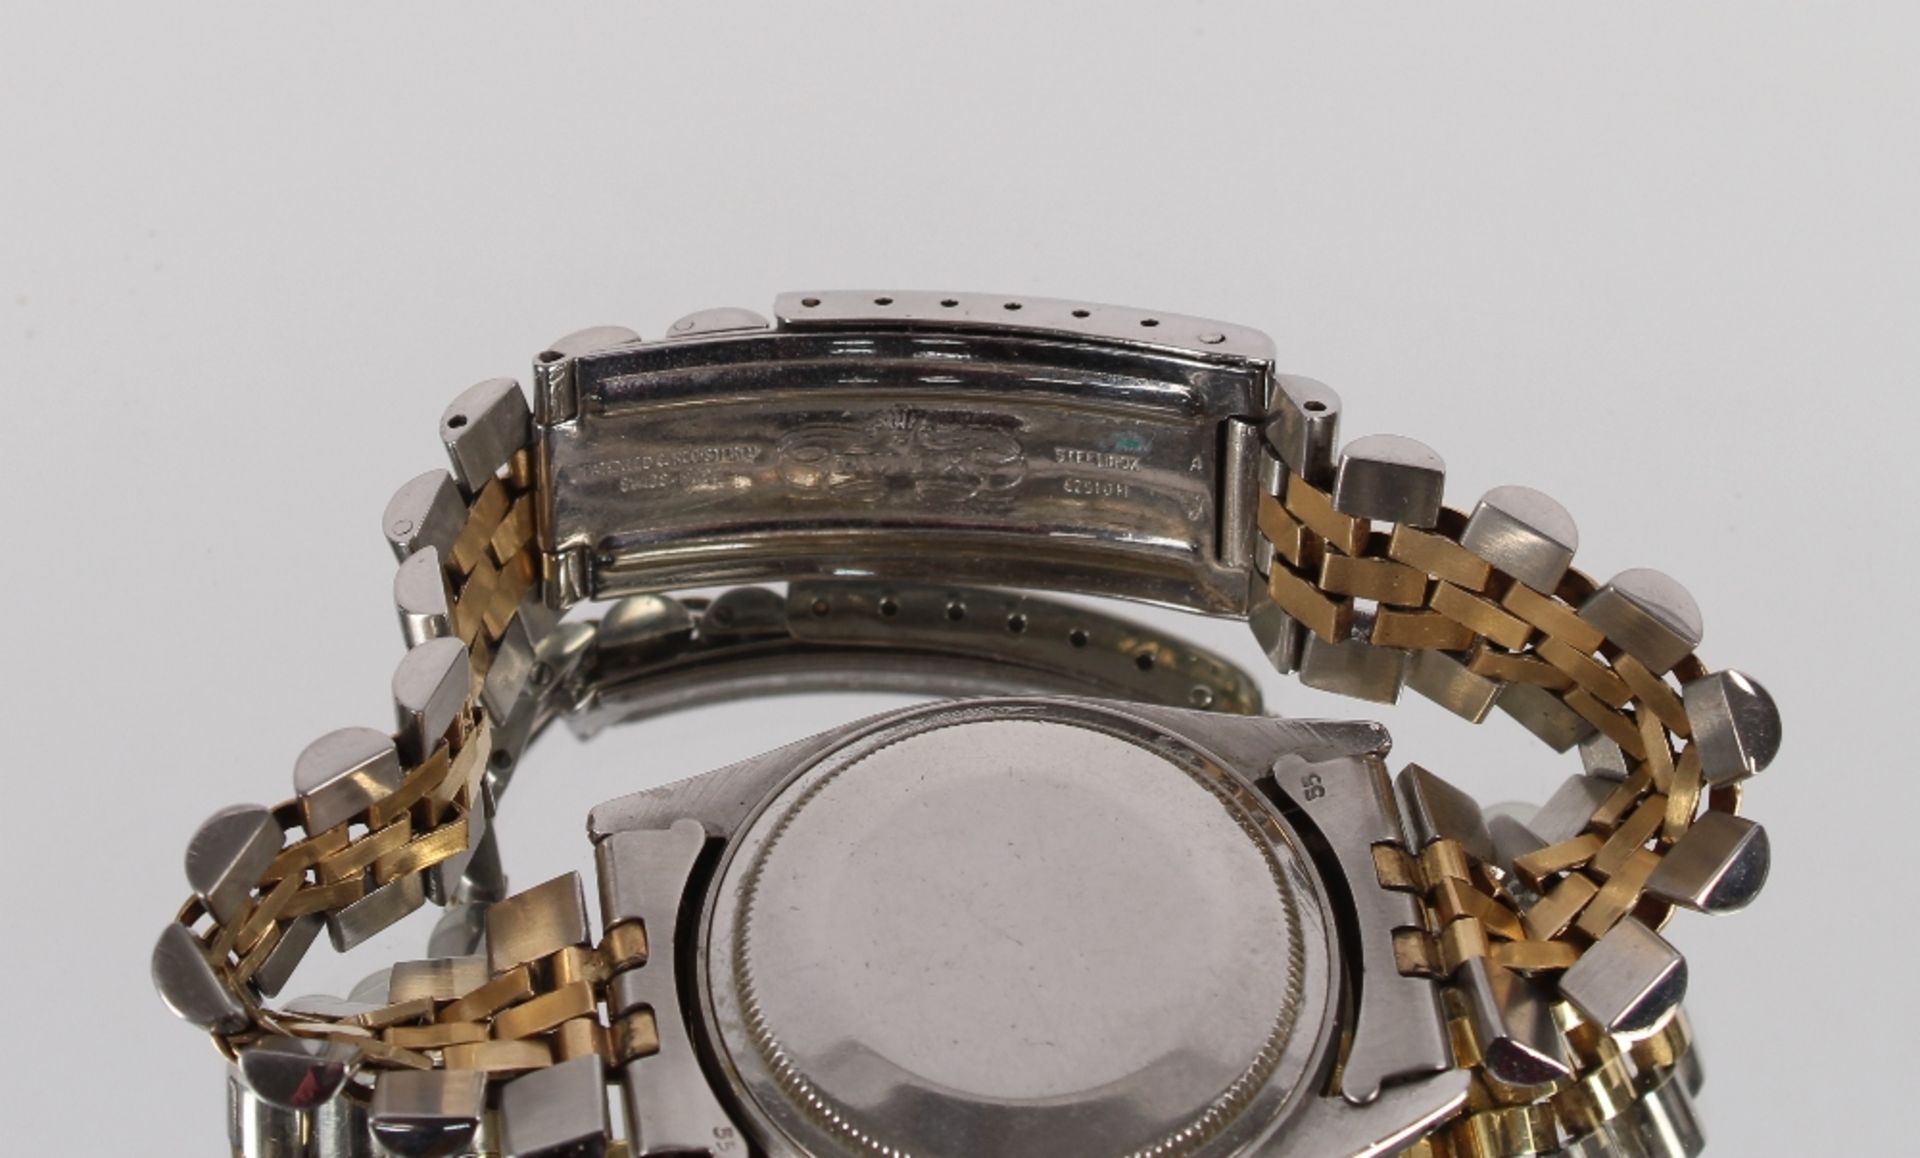 A Rolex Bi-Metallic date adjust Oyster Perpetual wrist watch - Image 7 of 9